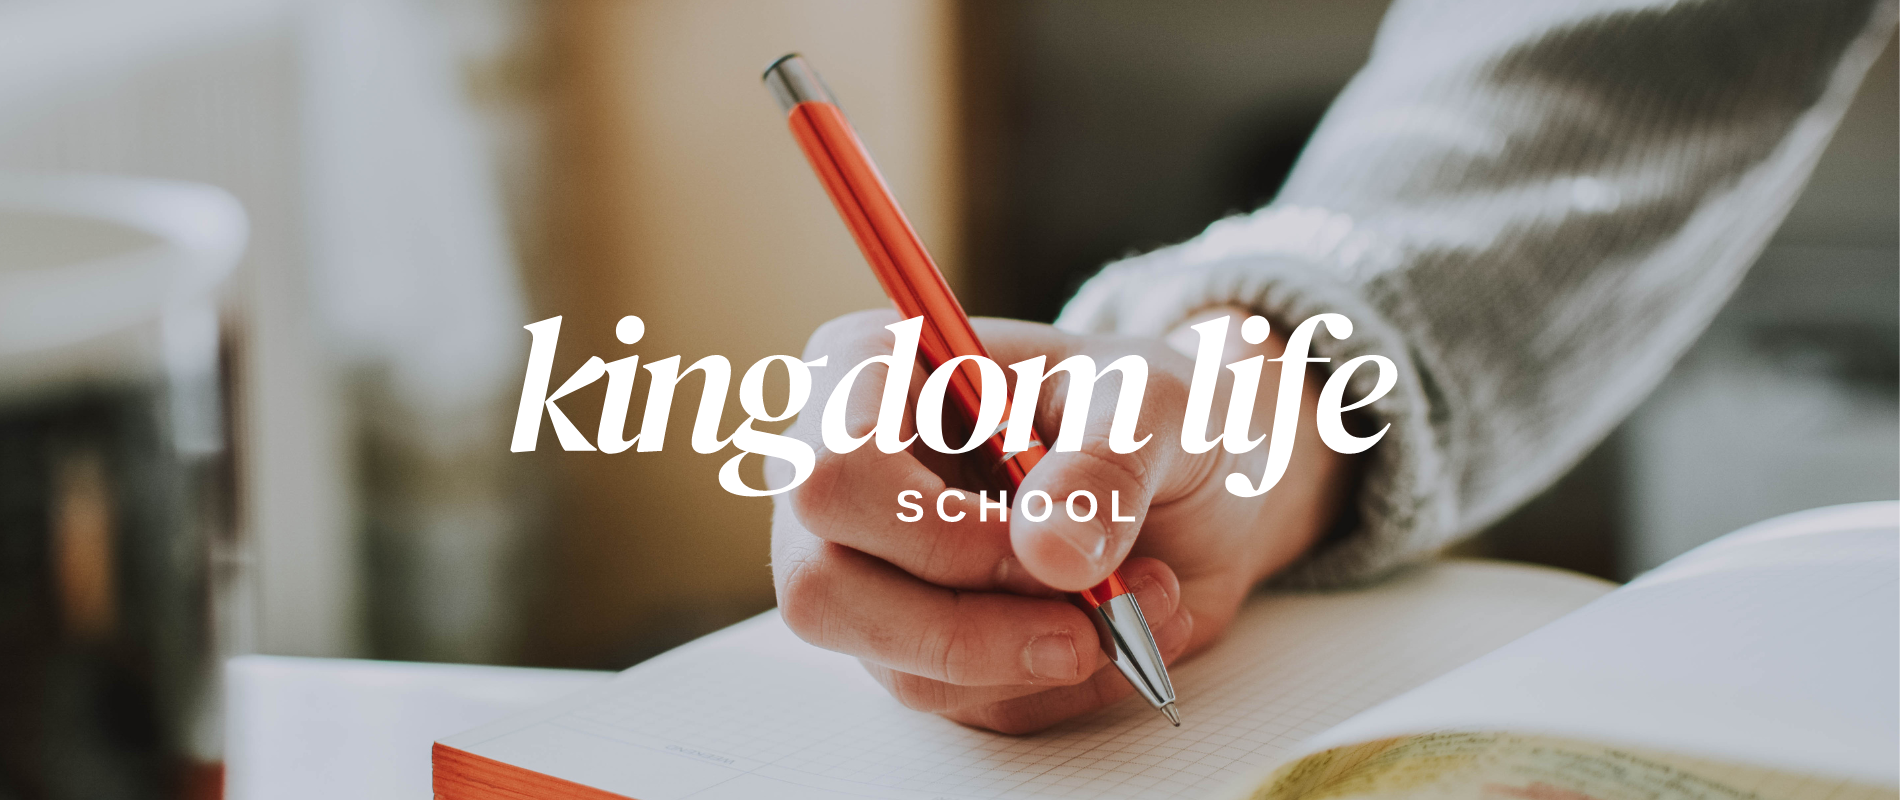 Kingdom Life School Is Now Enrolling